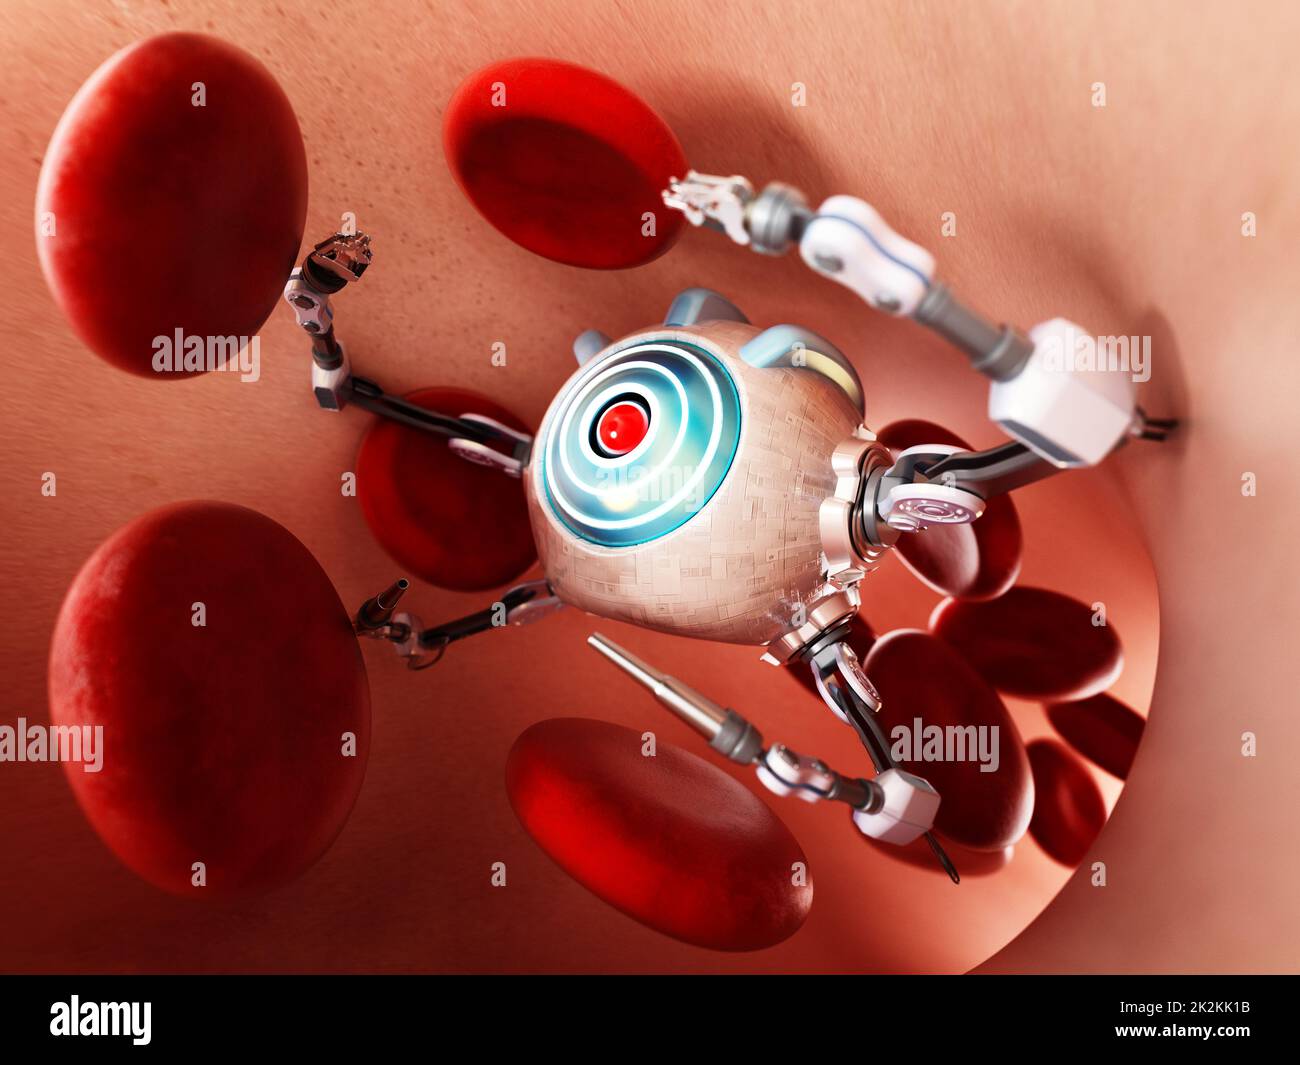 Medical nano robot inside human vein. 3D illustration Stock Photo